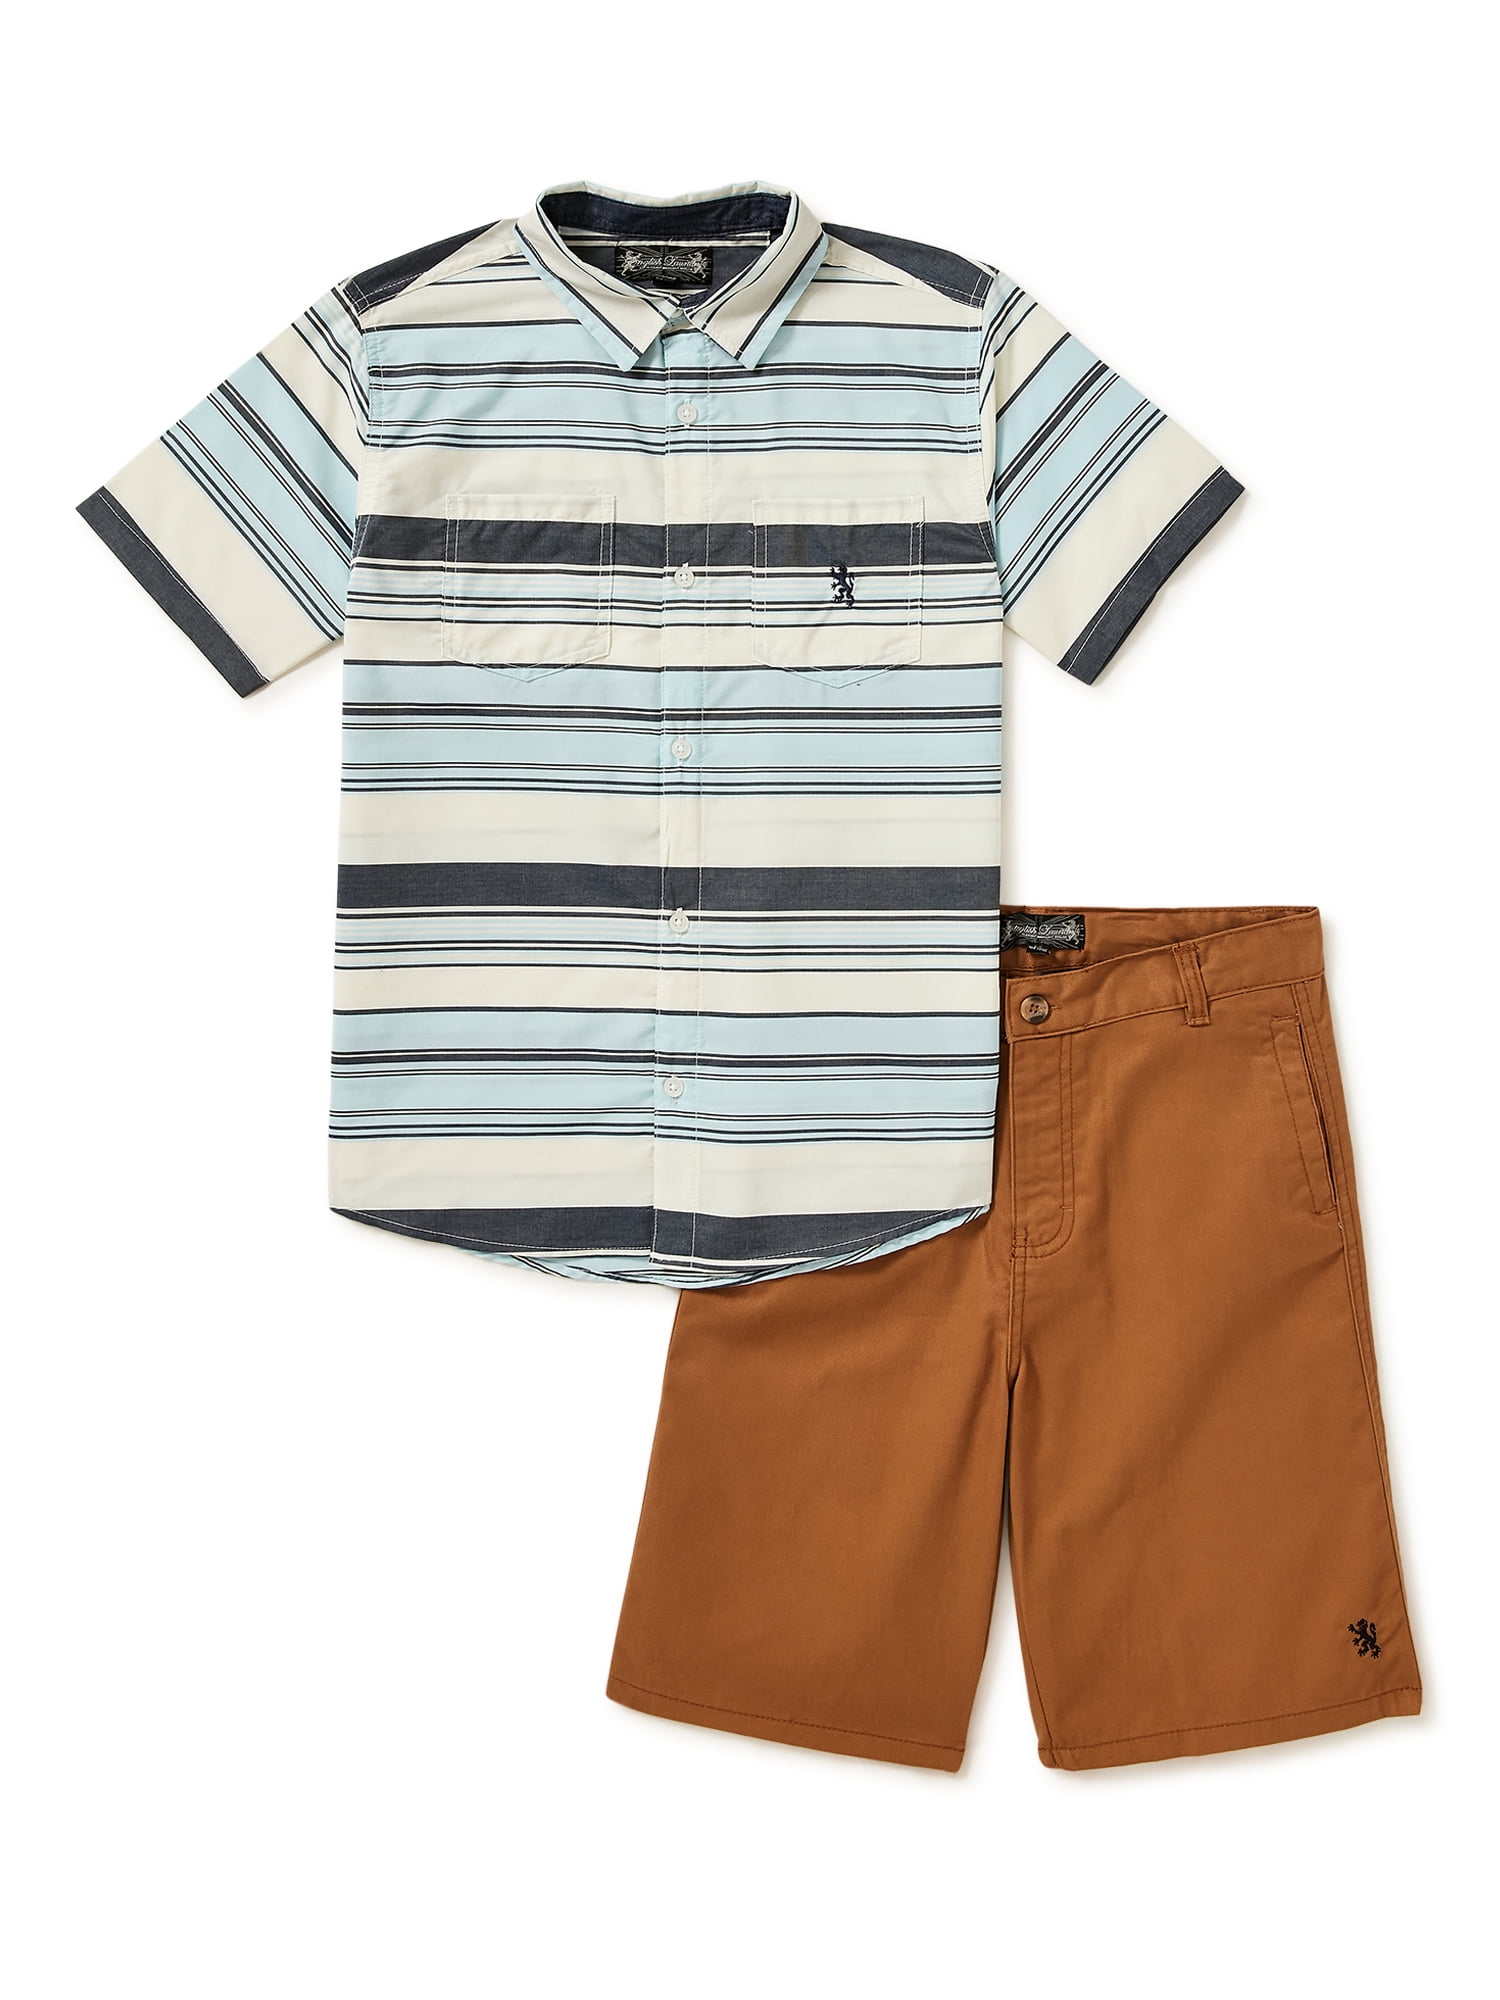 English Laundry Boys Sleeve Striped Woven Shirt and Short Set